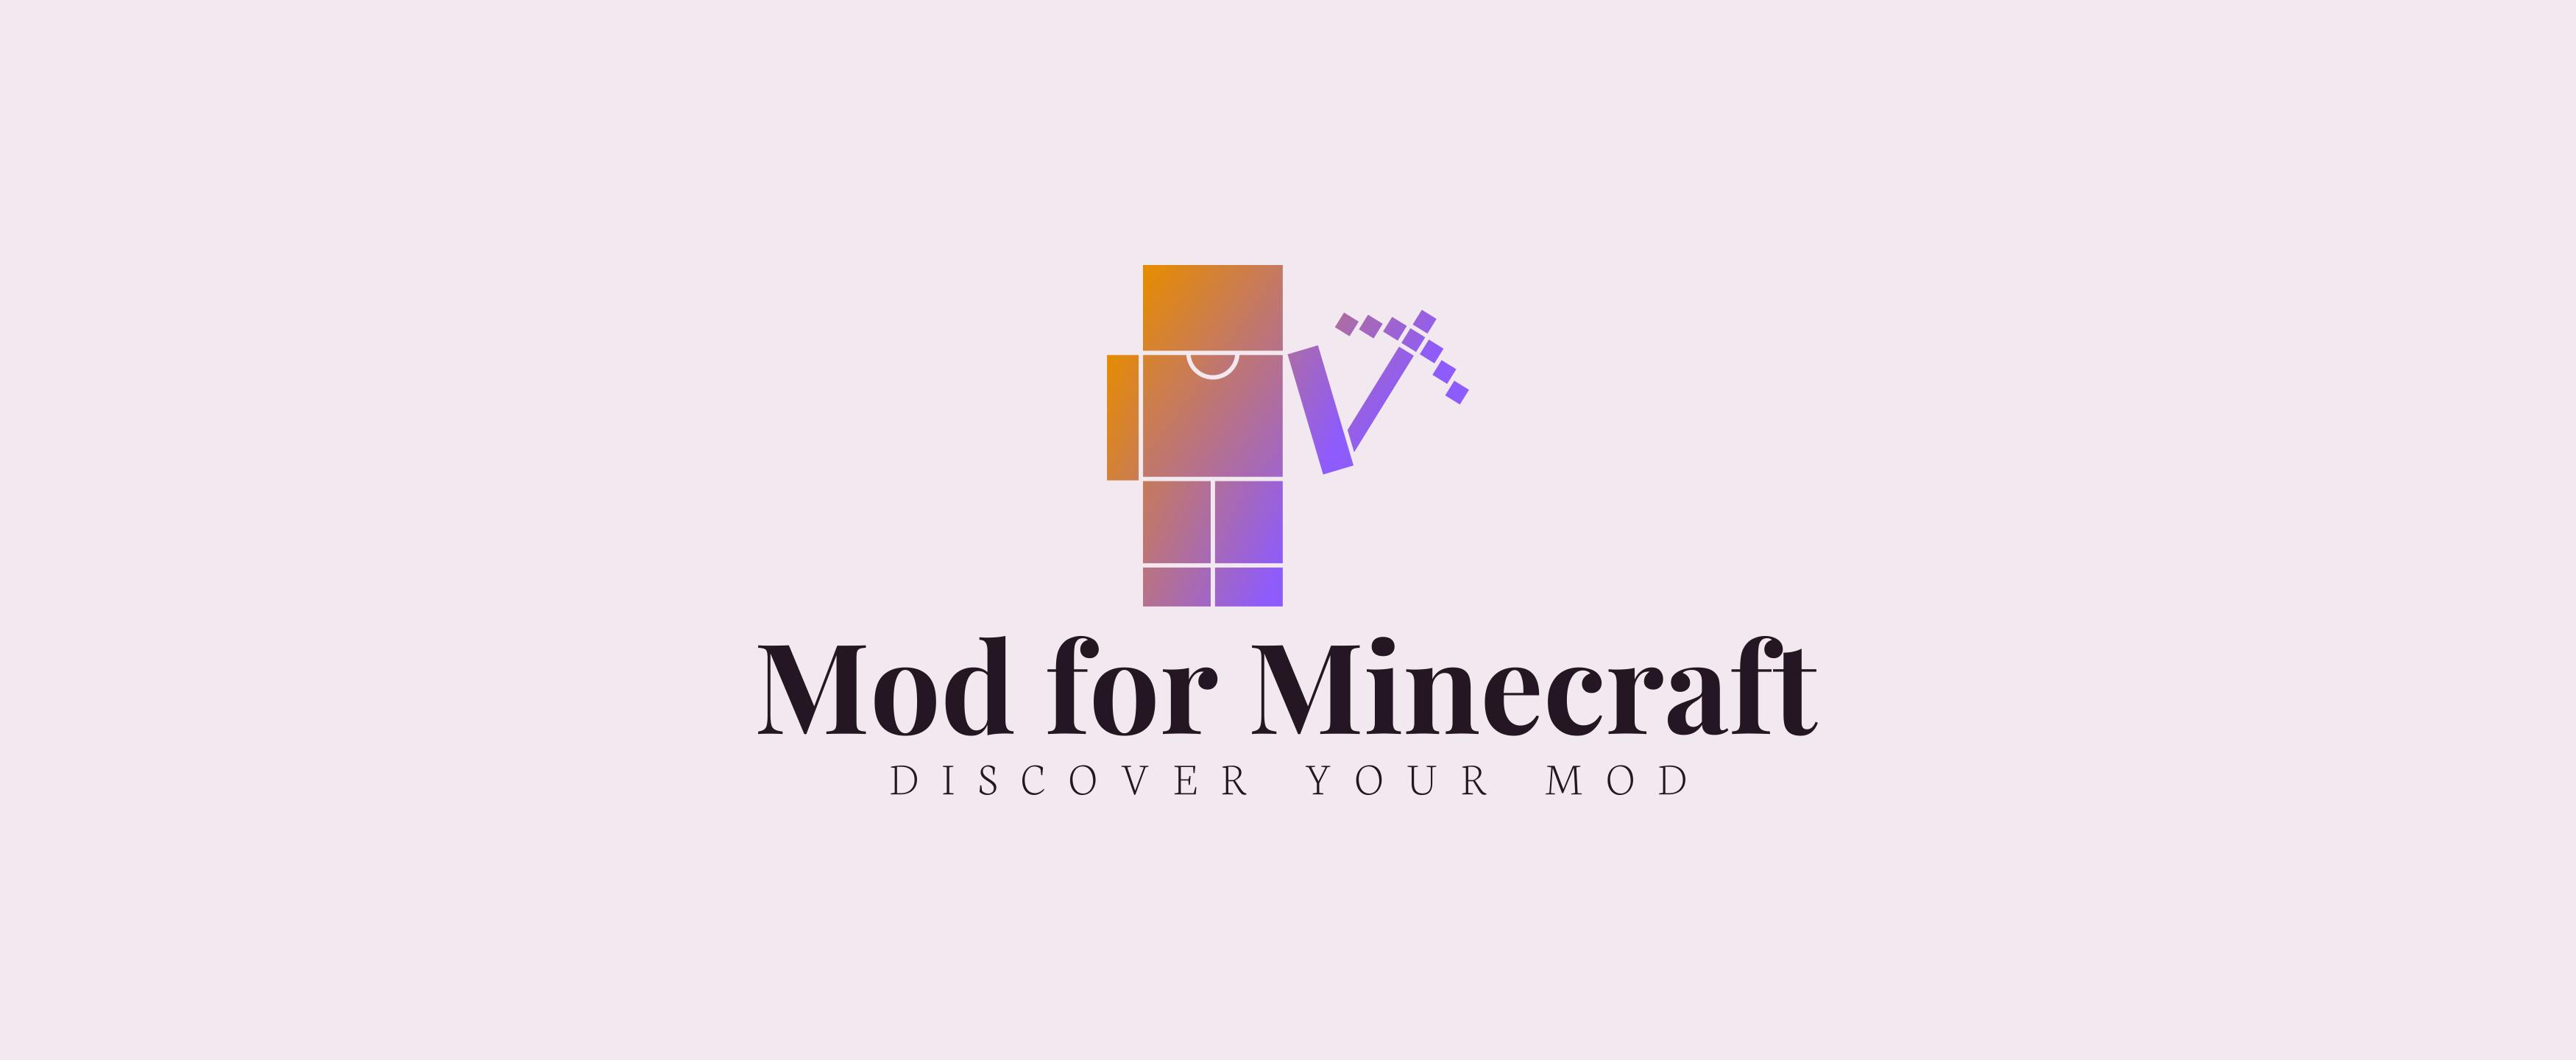 Mod For Minecraft